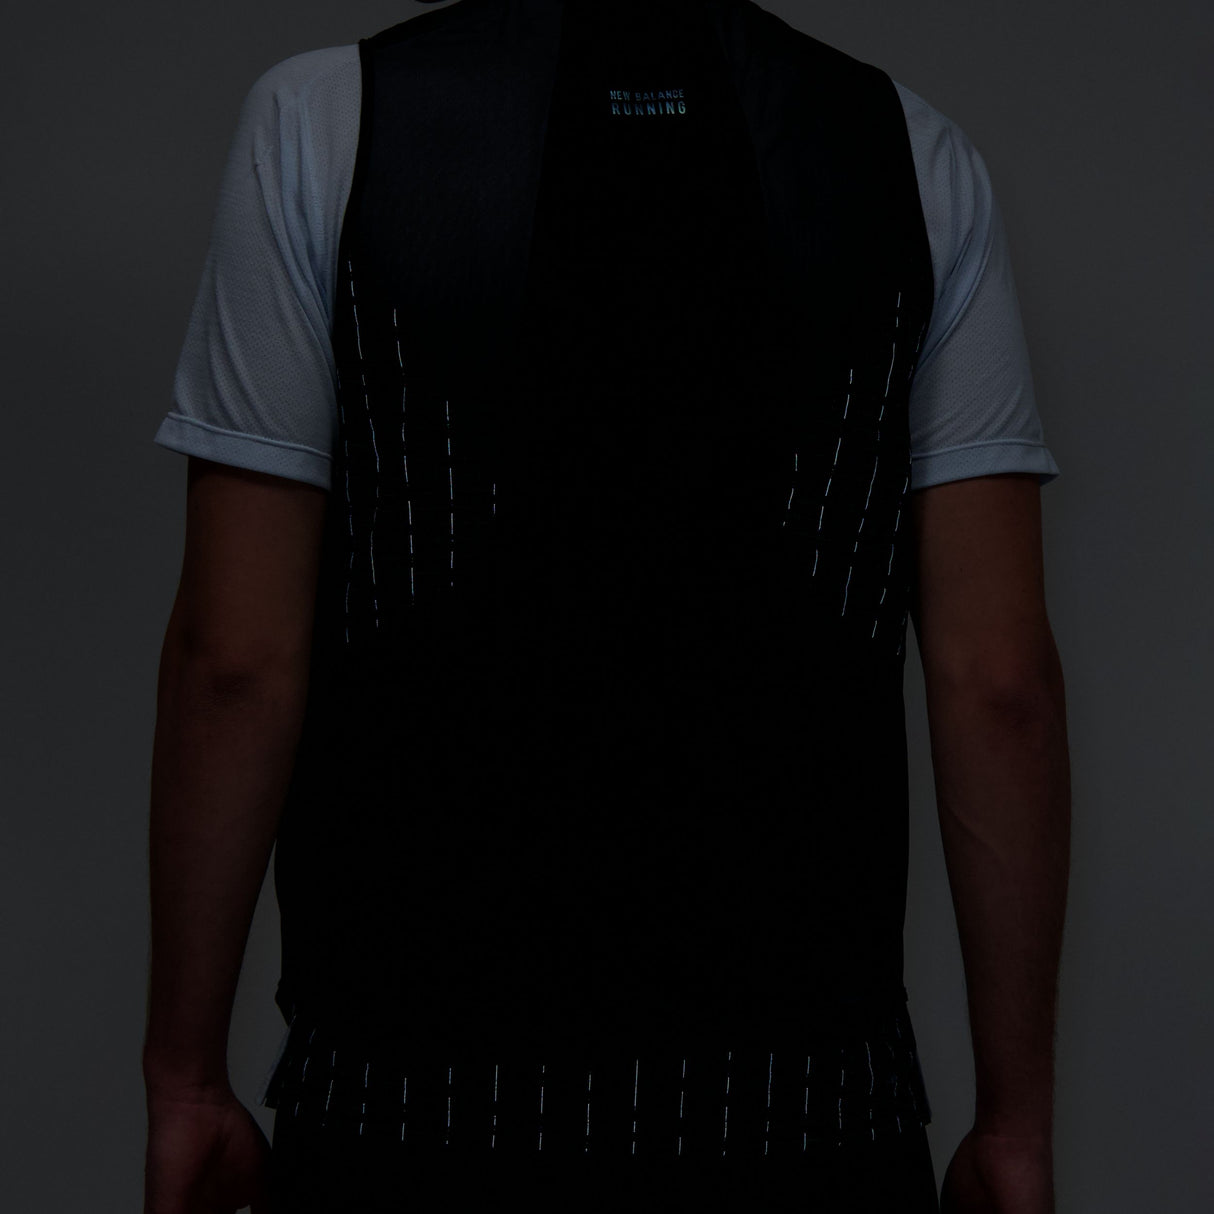 New Balance Men's Impact Run Luminous Packable Vest